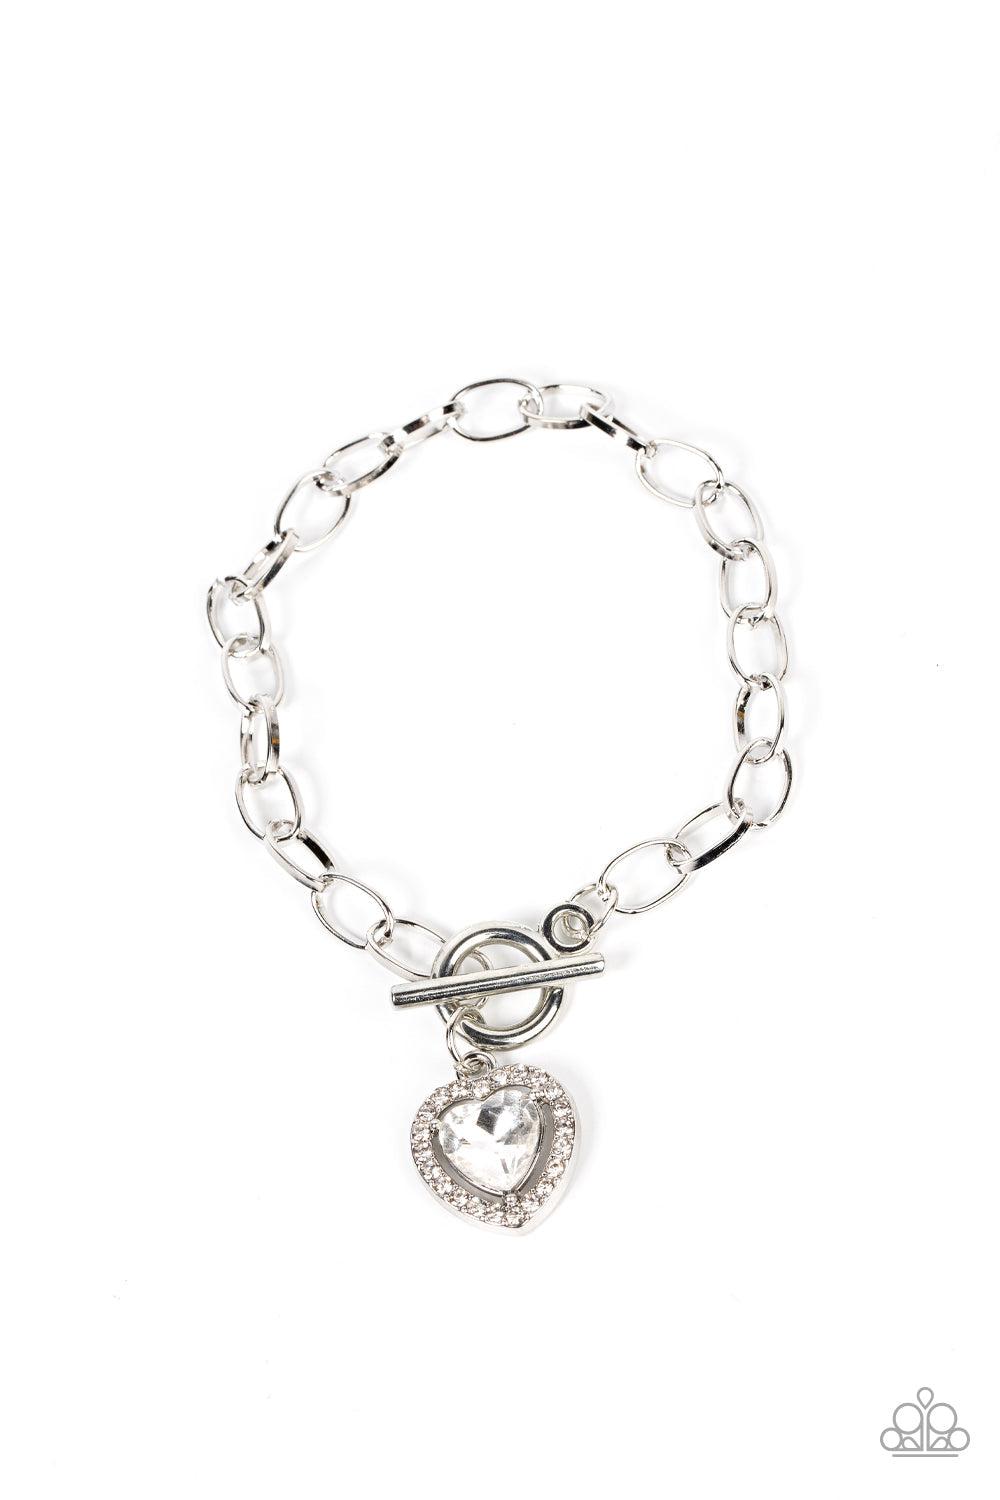 Till DAZZLE Do Us Part White Rhinestone Heart Bracelet - Paparazzi Accessories- lightbox - CarasShop.com - $5 Jewelry by Cara Jewels